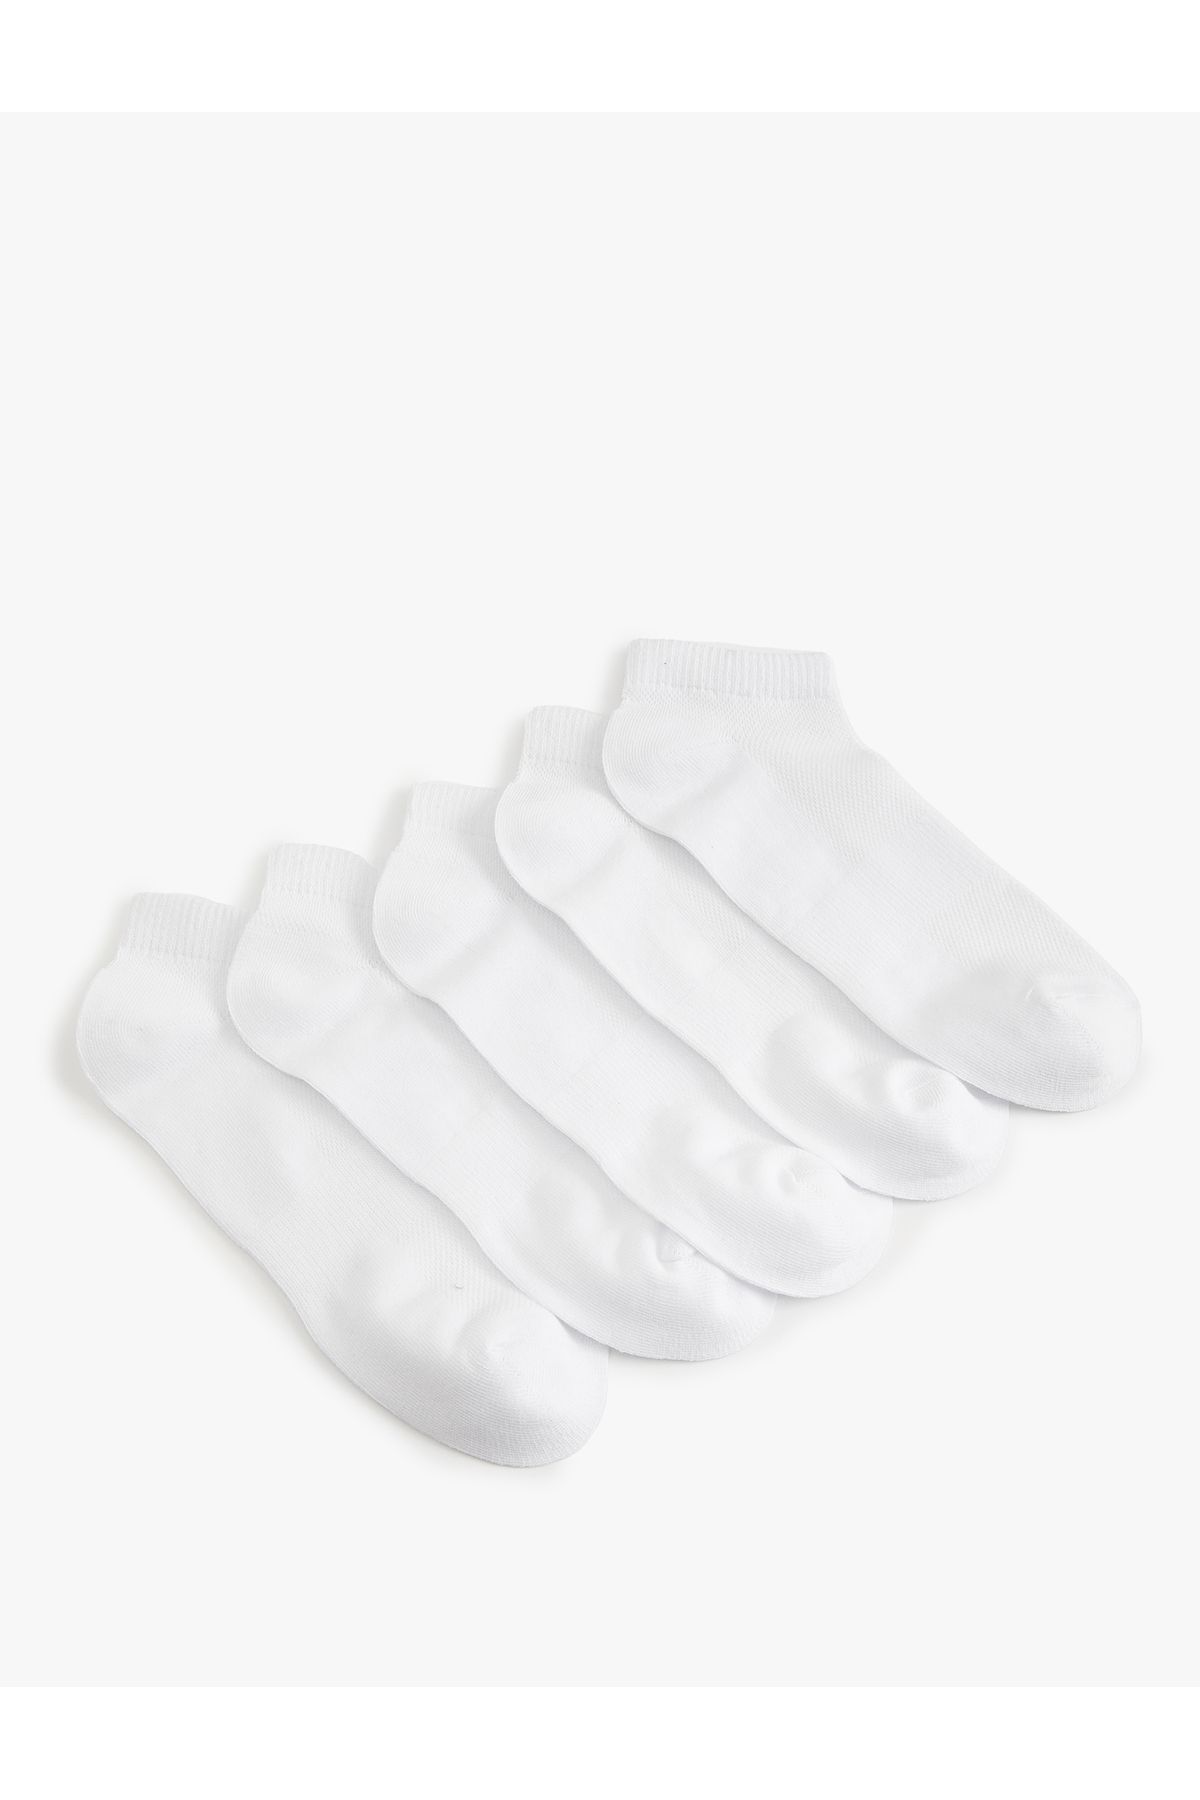 Koton Basic 5'li Patik Çorap Seti